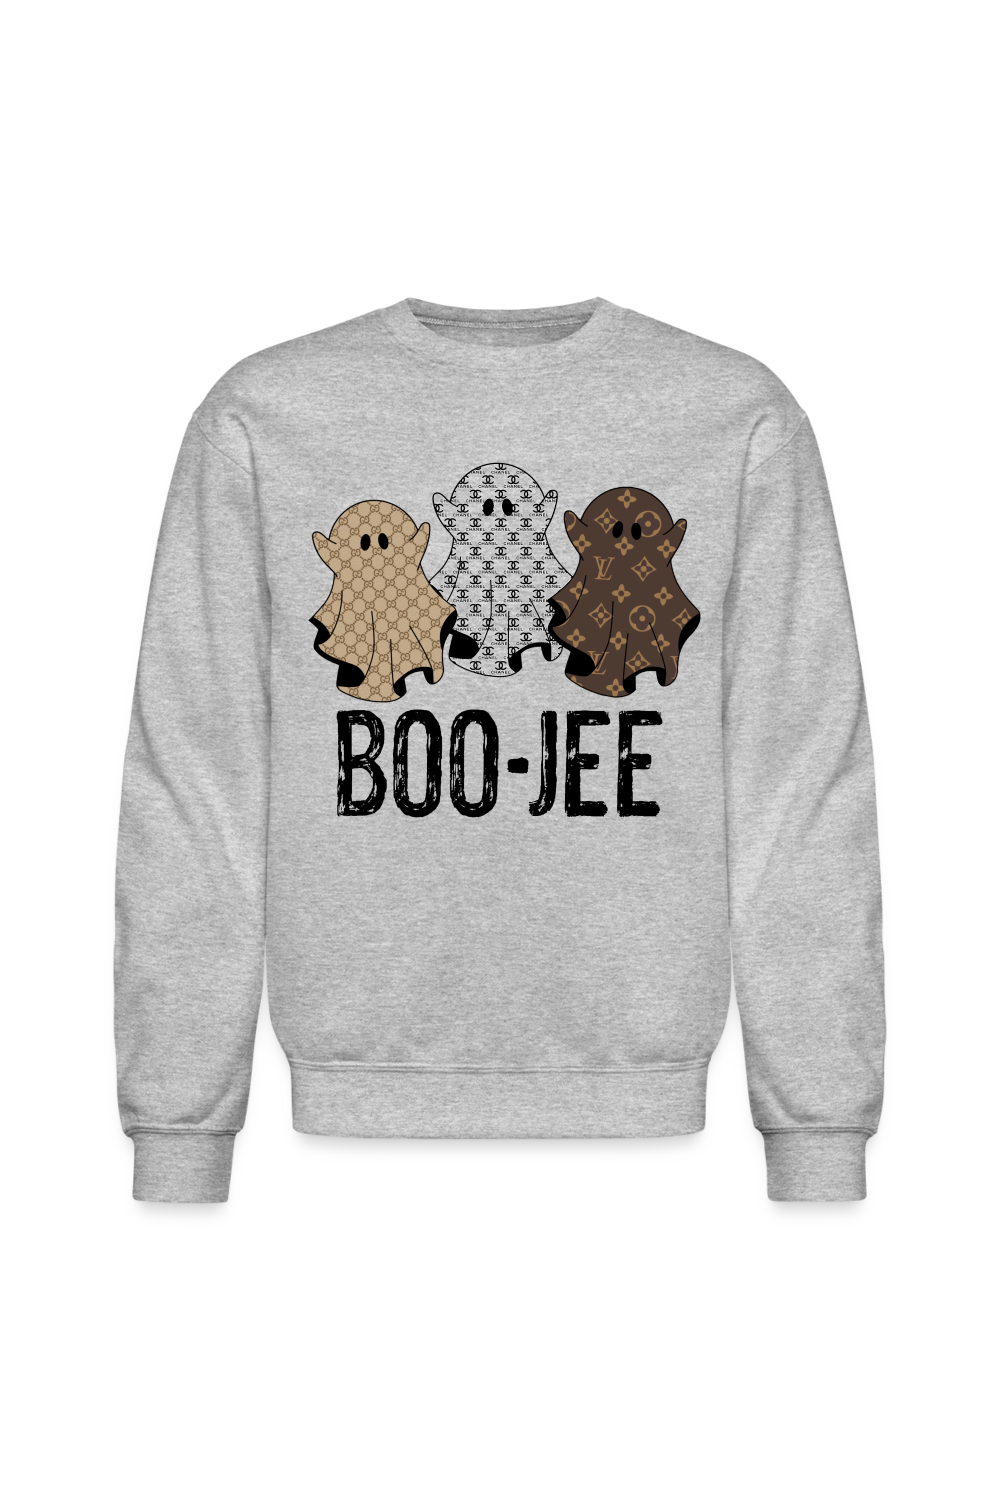 Women Boo - Jee Crewneck Sweatshirt - heather gray